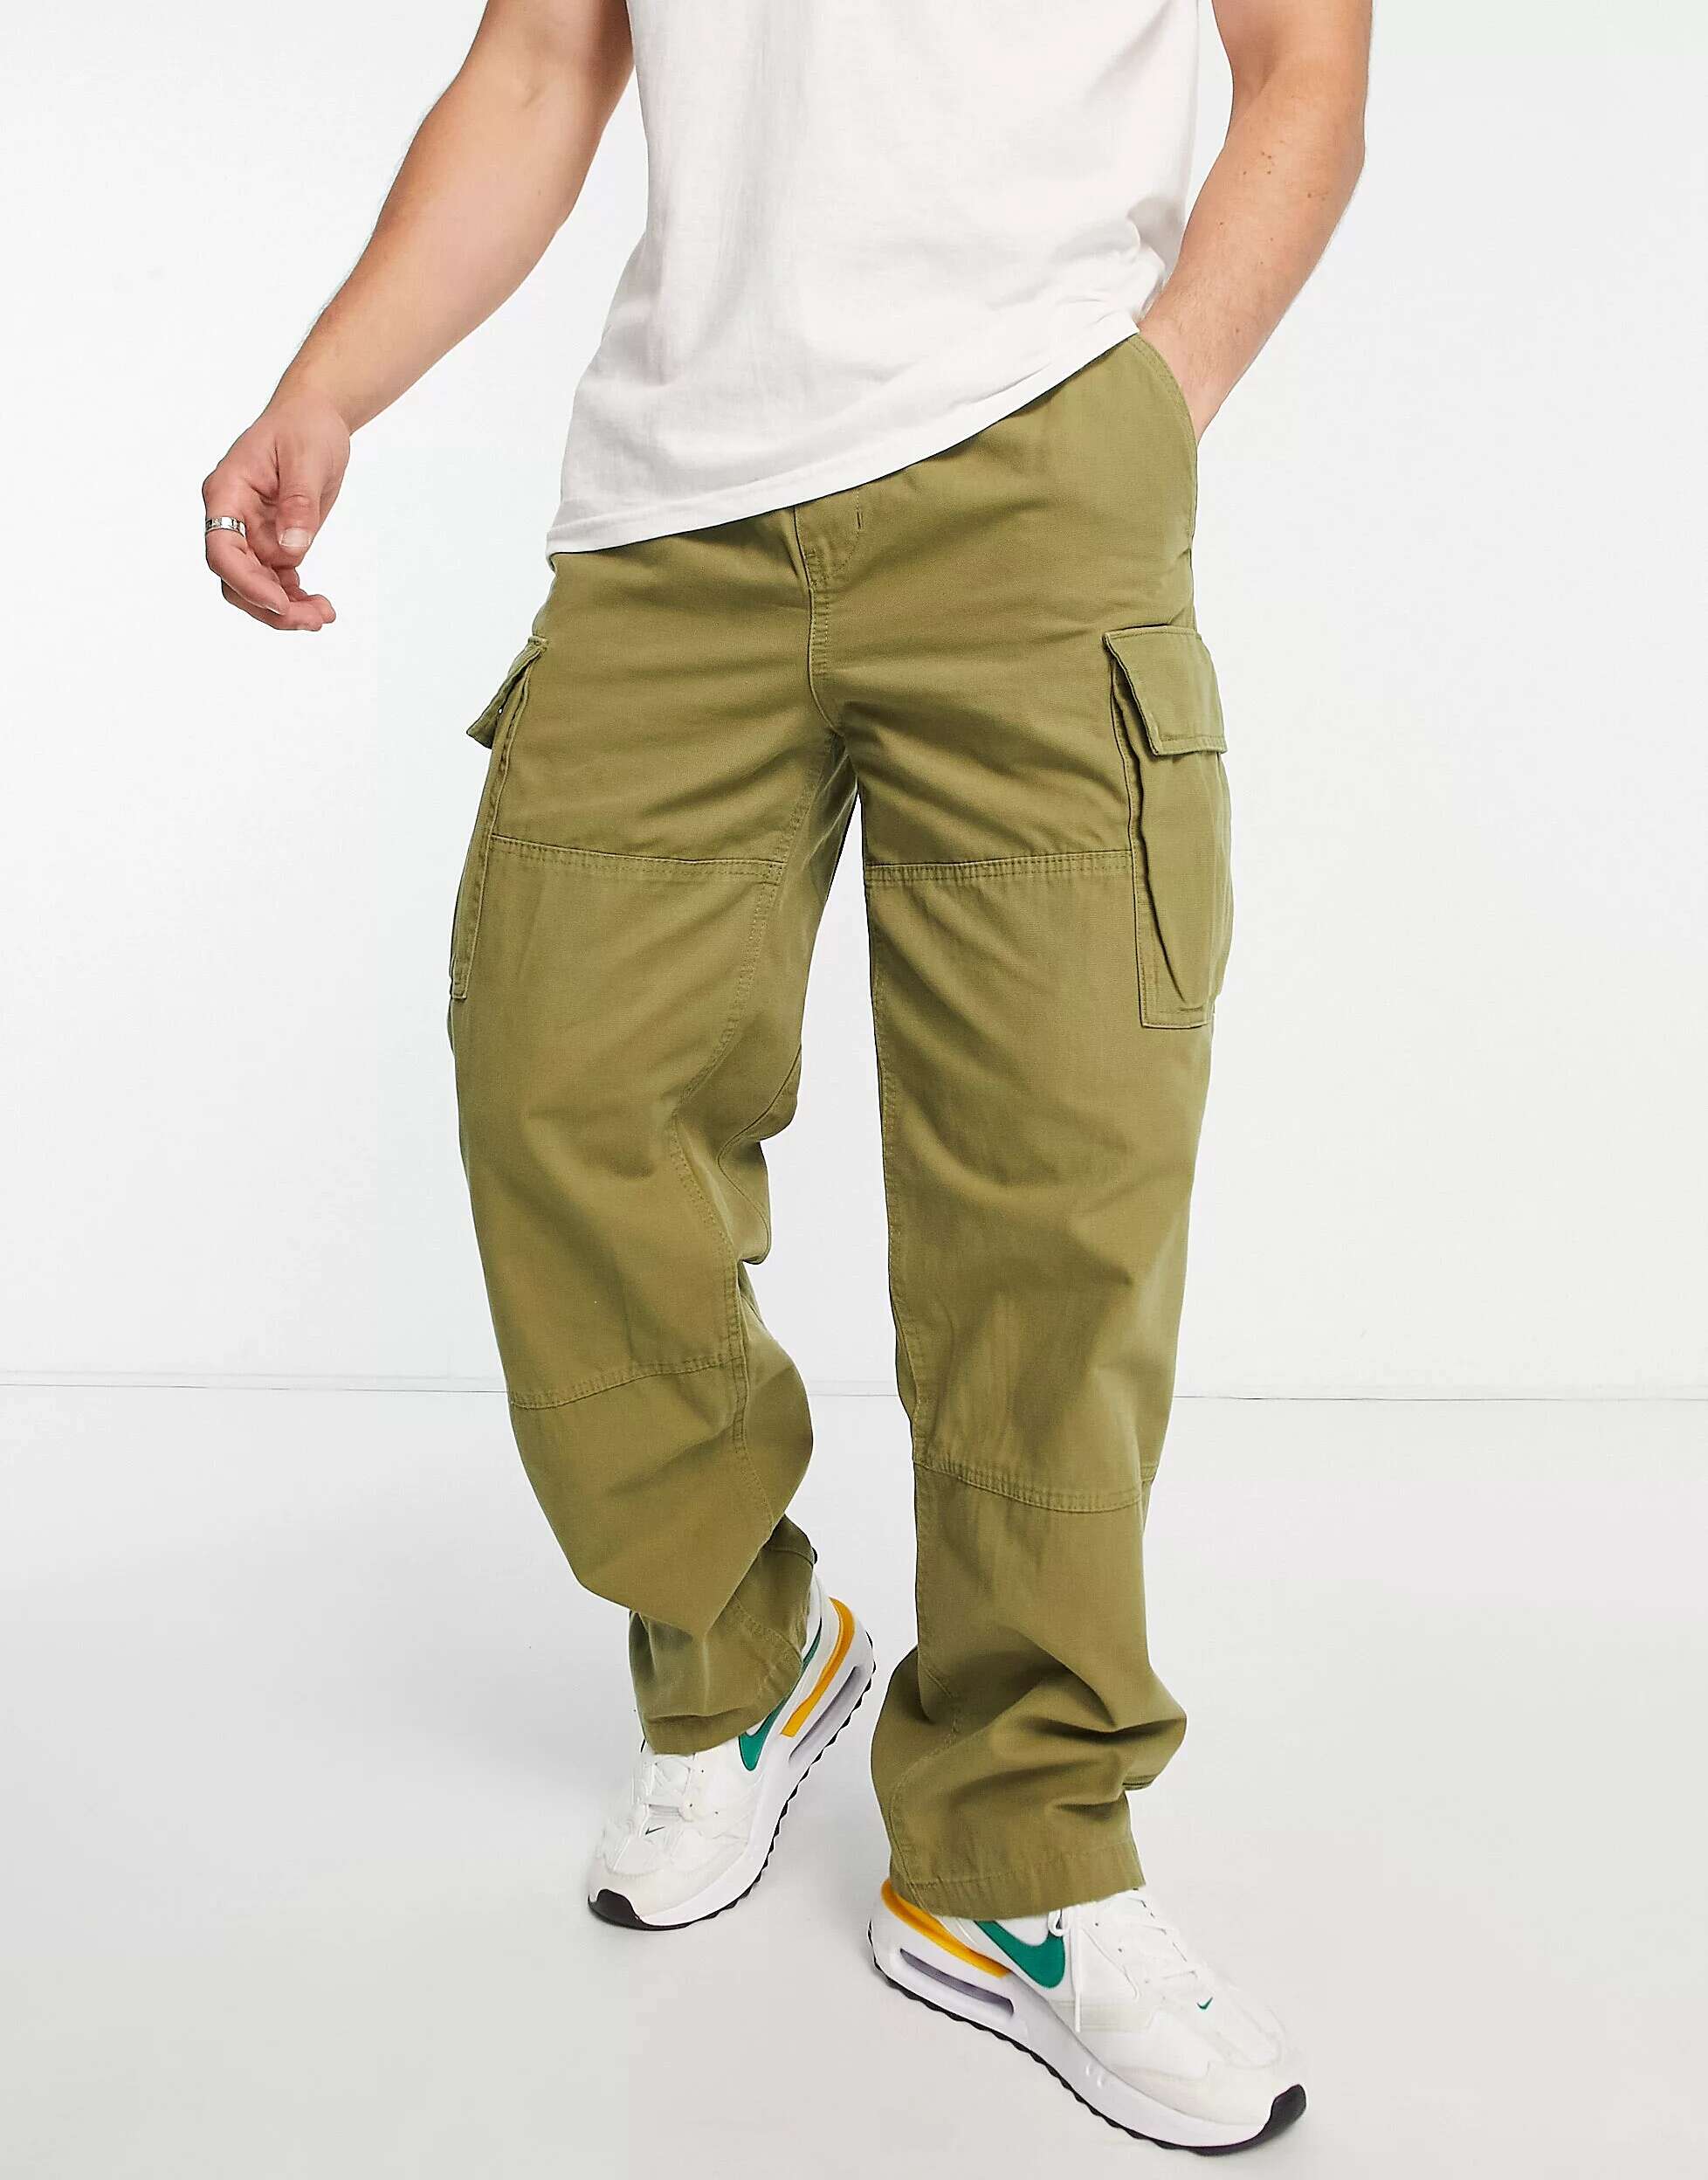 Широкие брюки-карго Weekday Joshua цвета хаки цена и фото